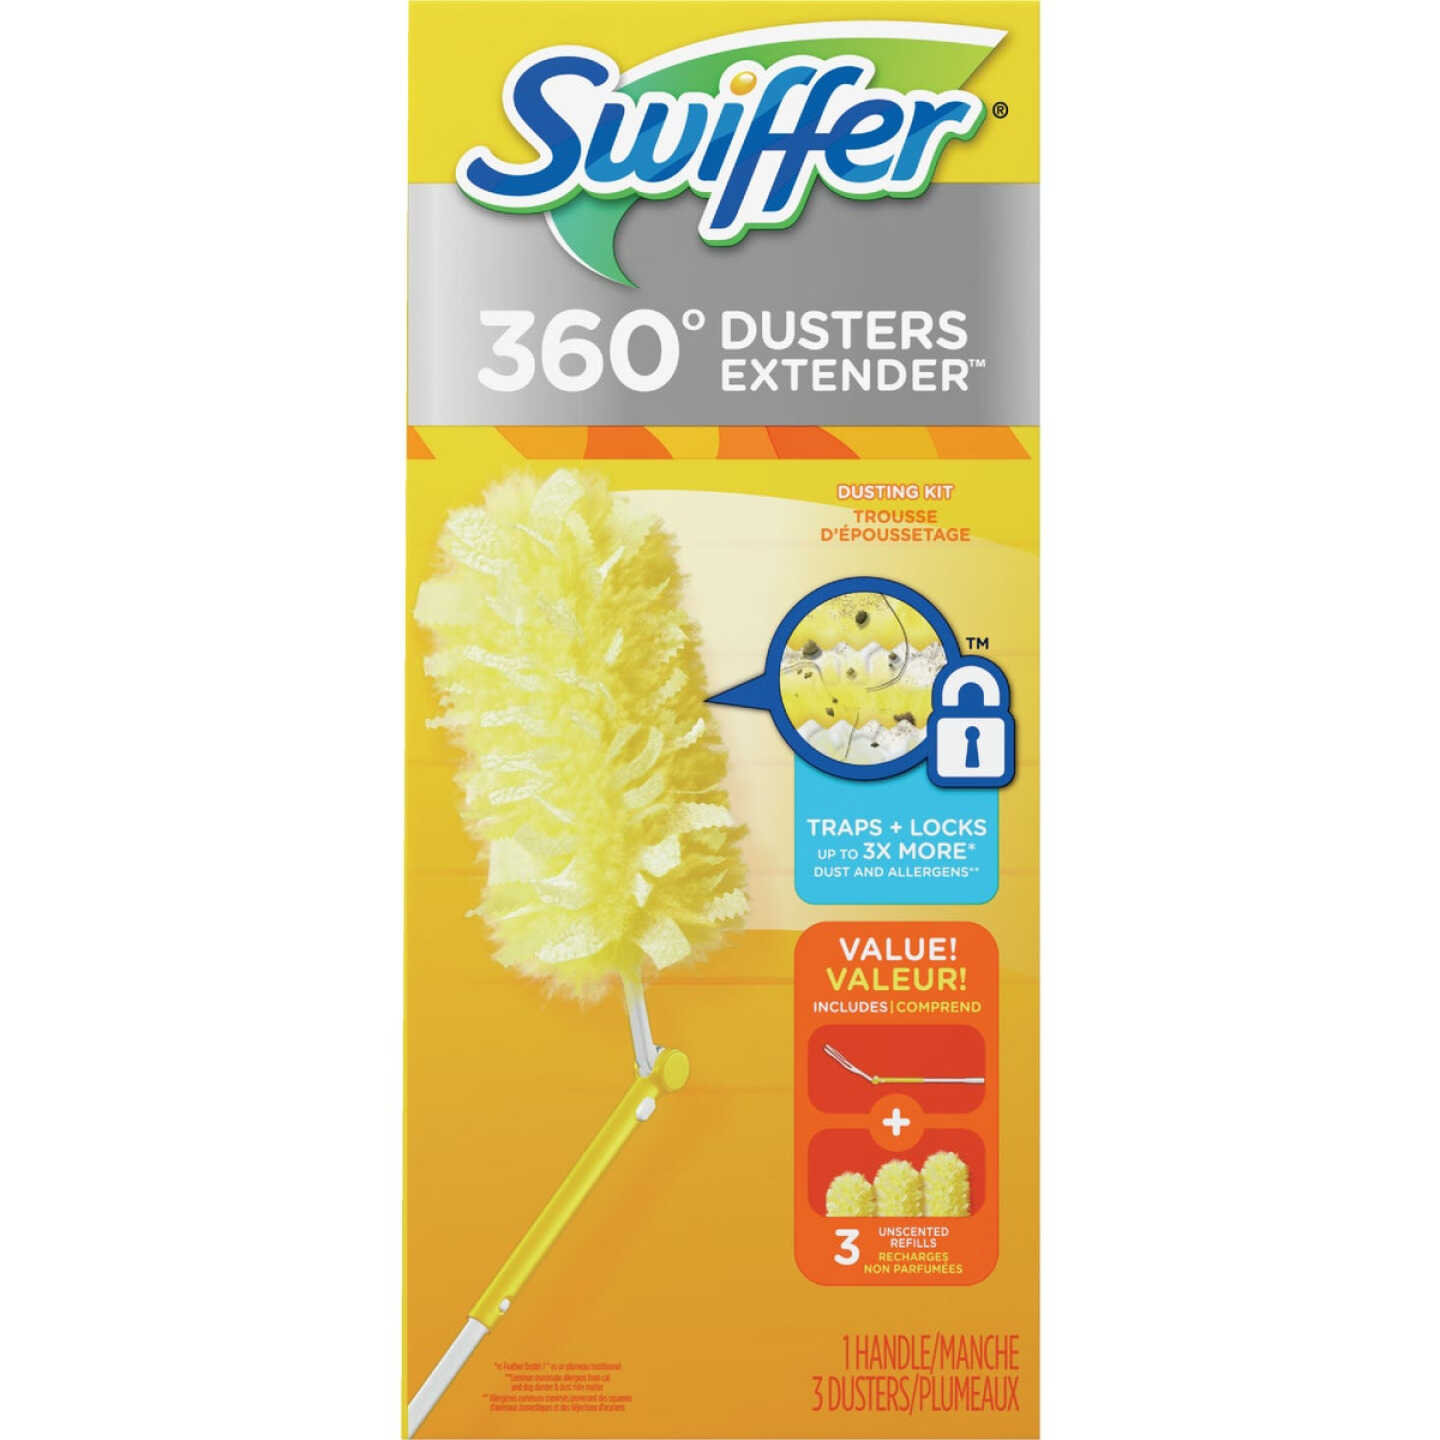 Swiffer Duster Kit Review 